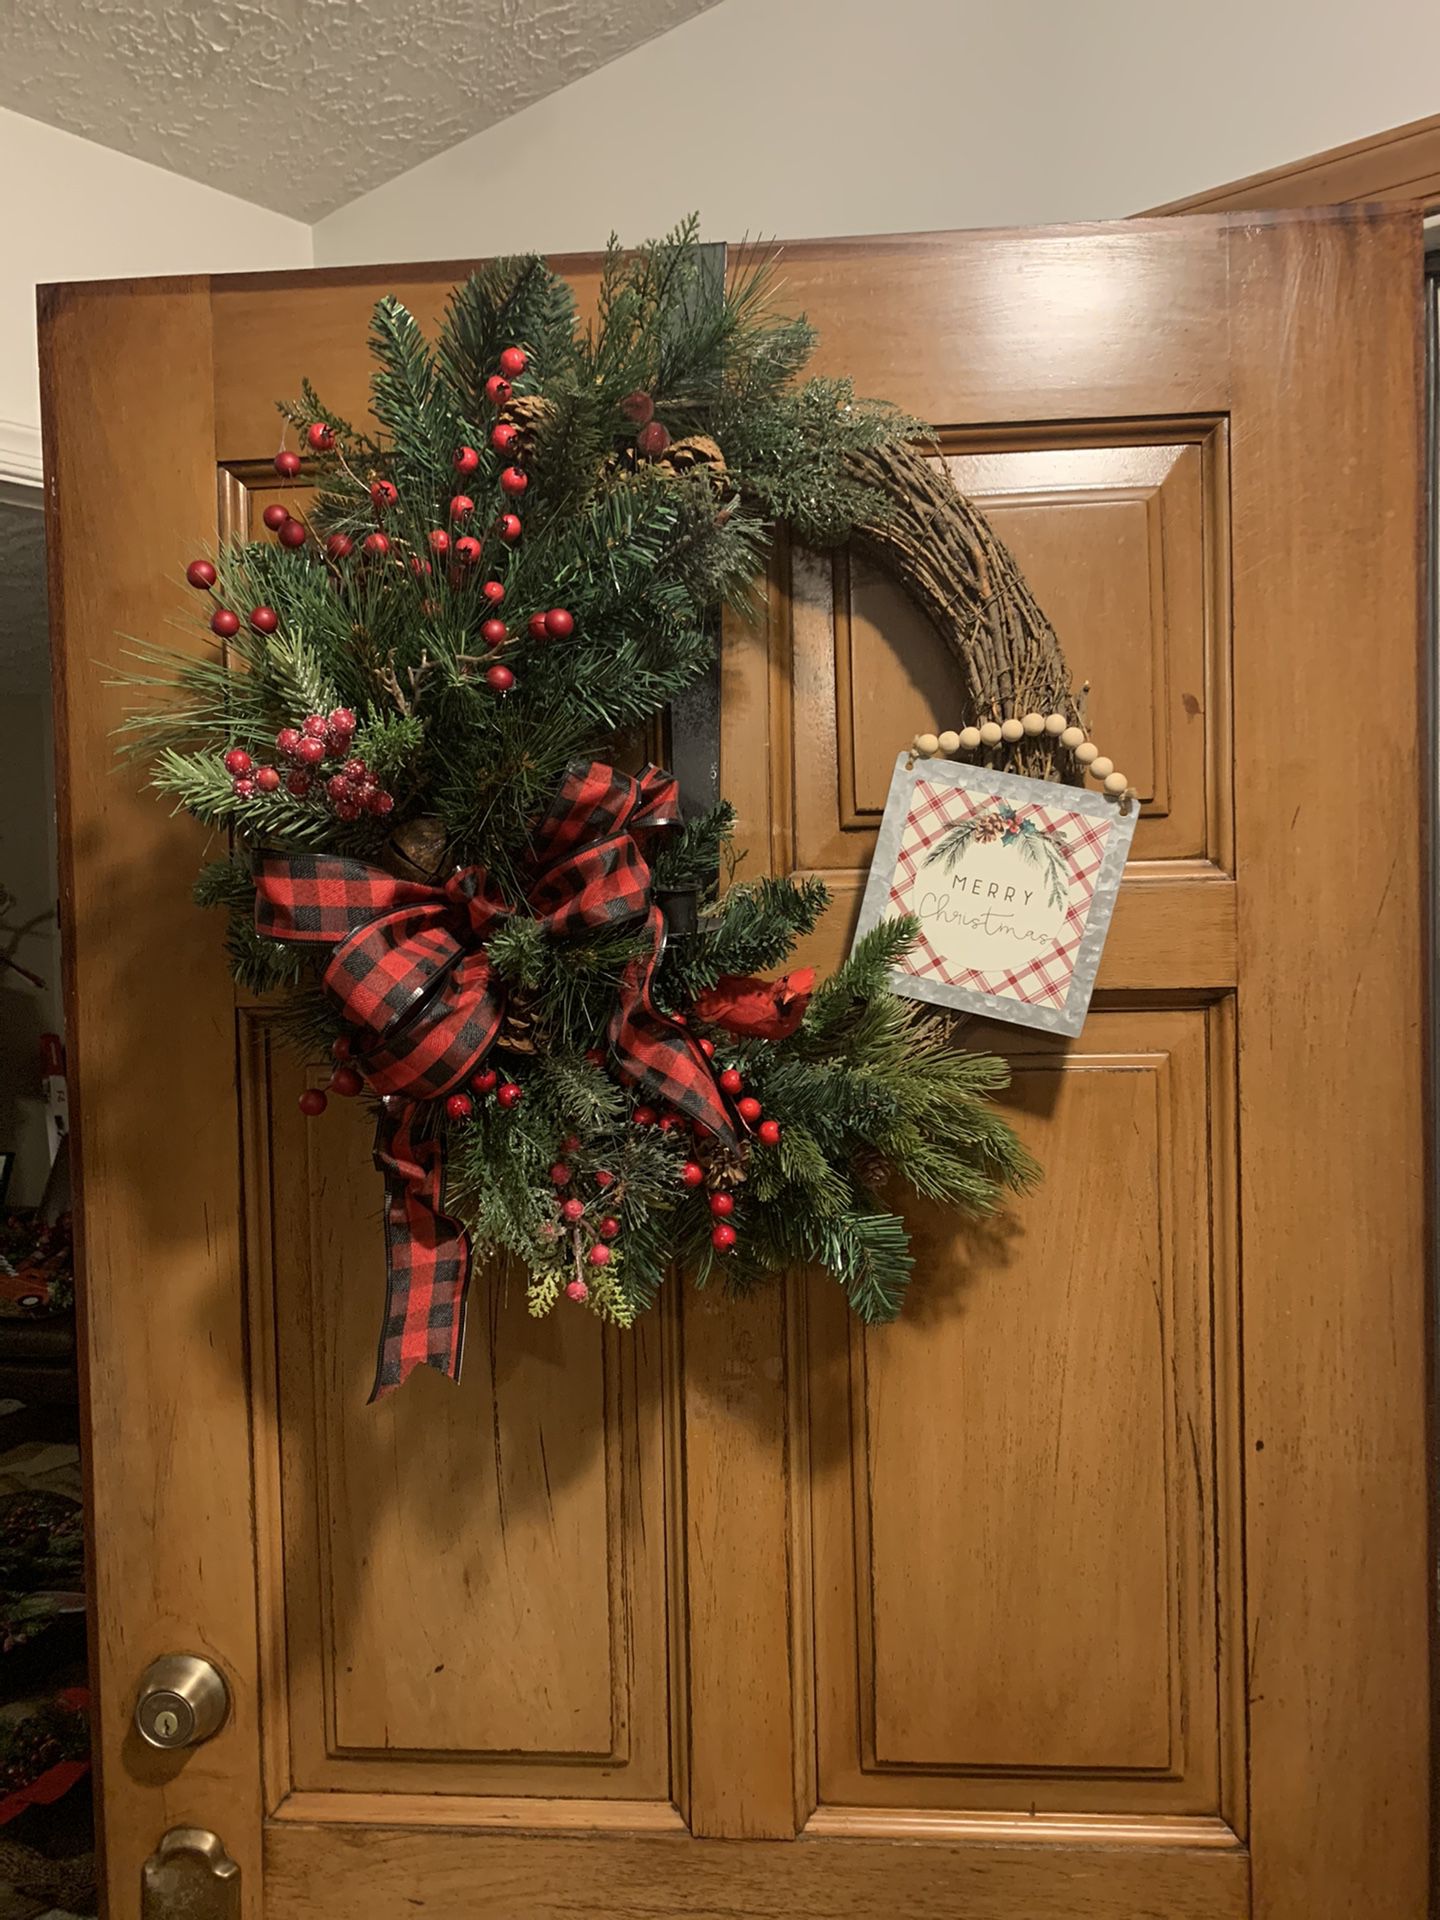 Beautiful Handmade Christmas/Winter Wreath with Cardinal and Merry Christmas sign